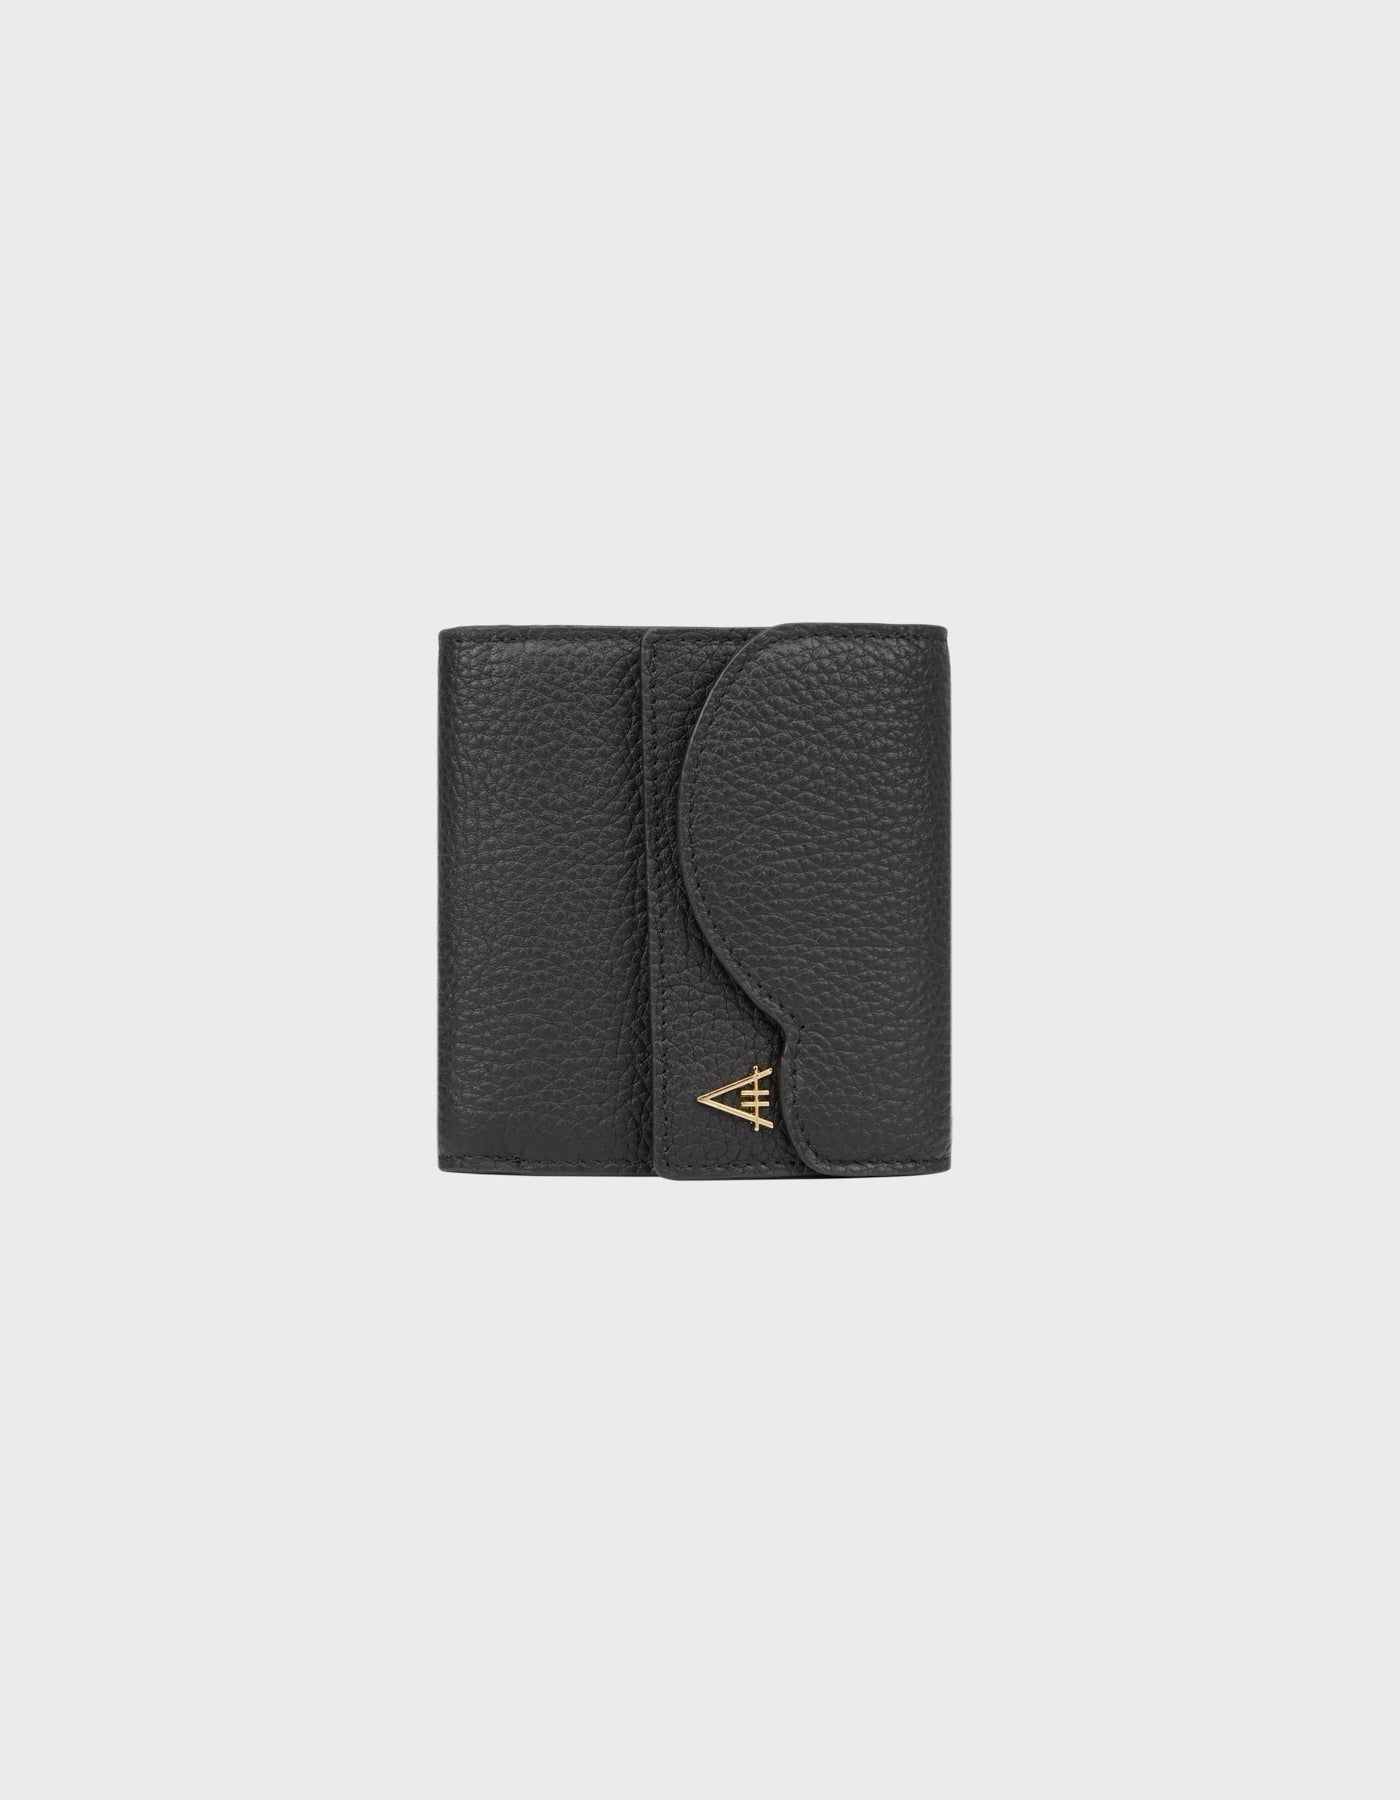 HiVa Atelier - Larus Compact Wallet Black